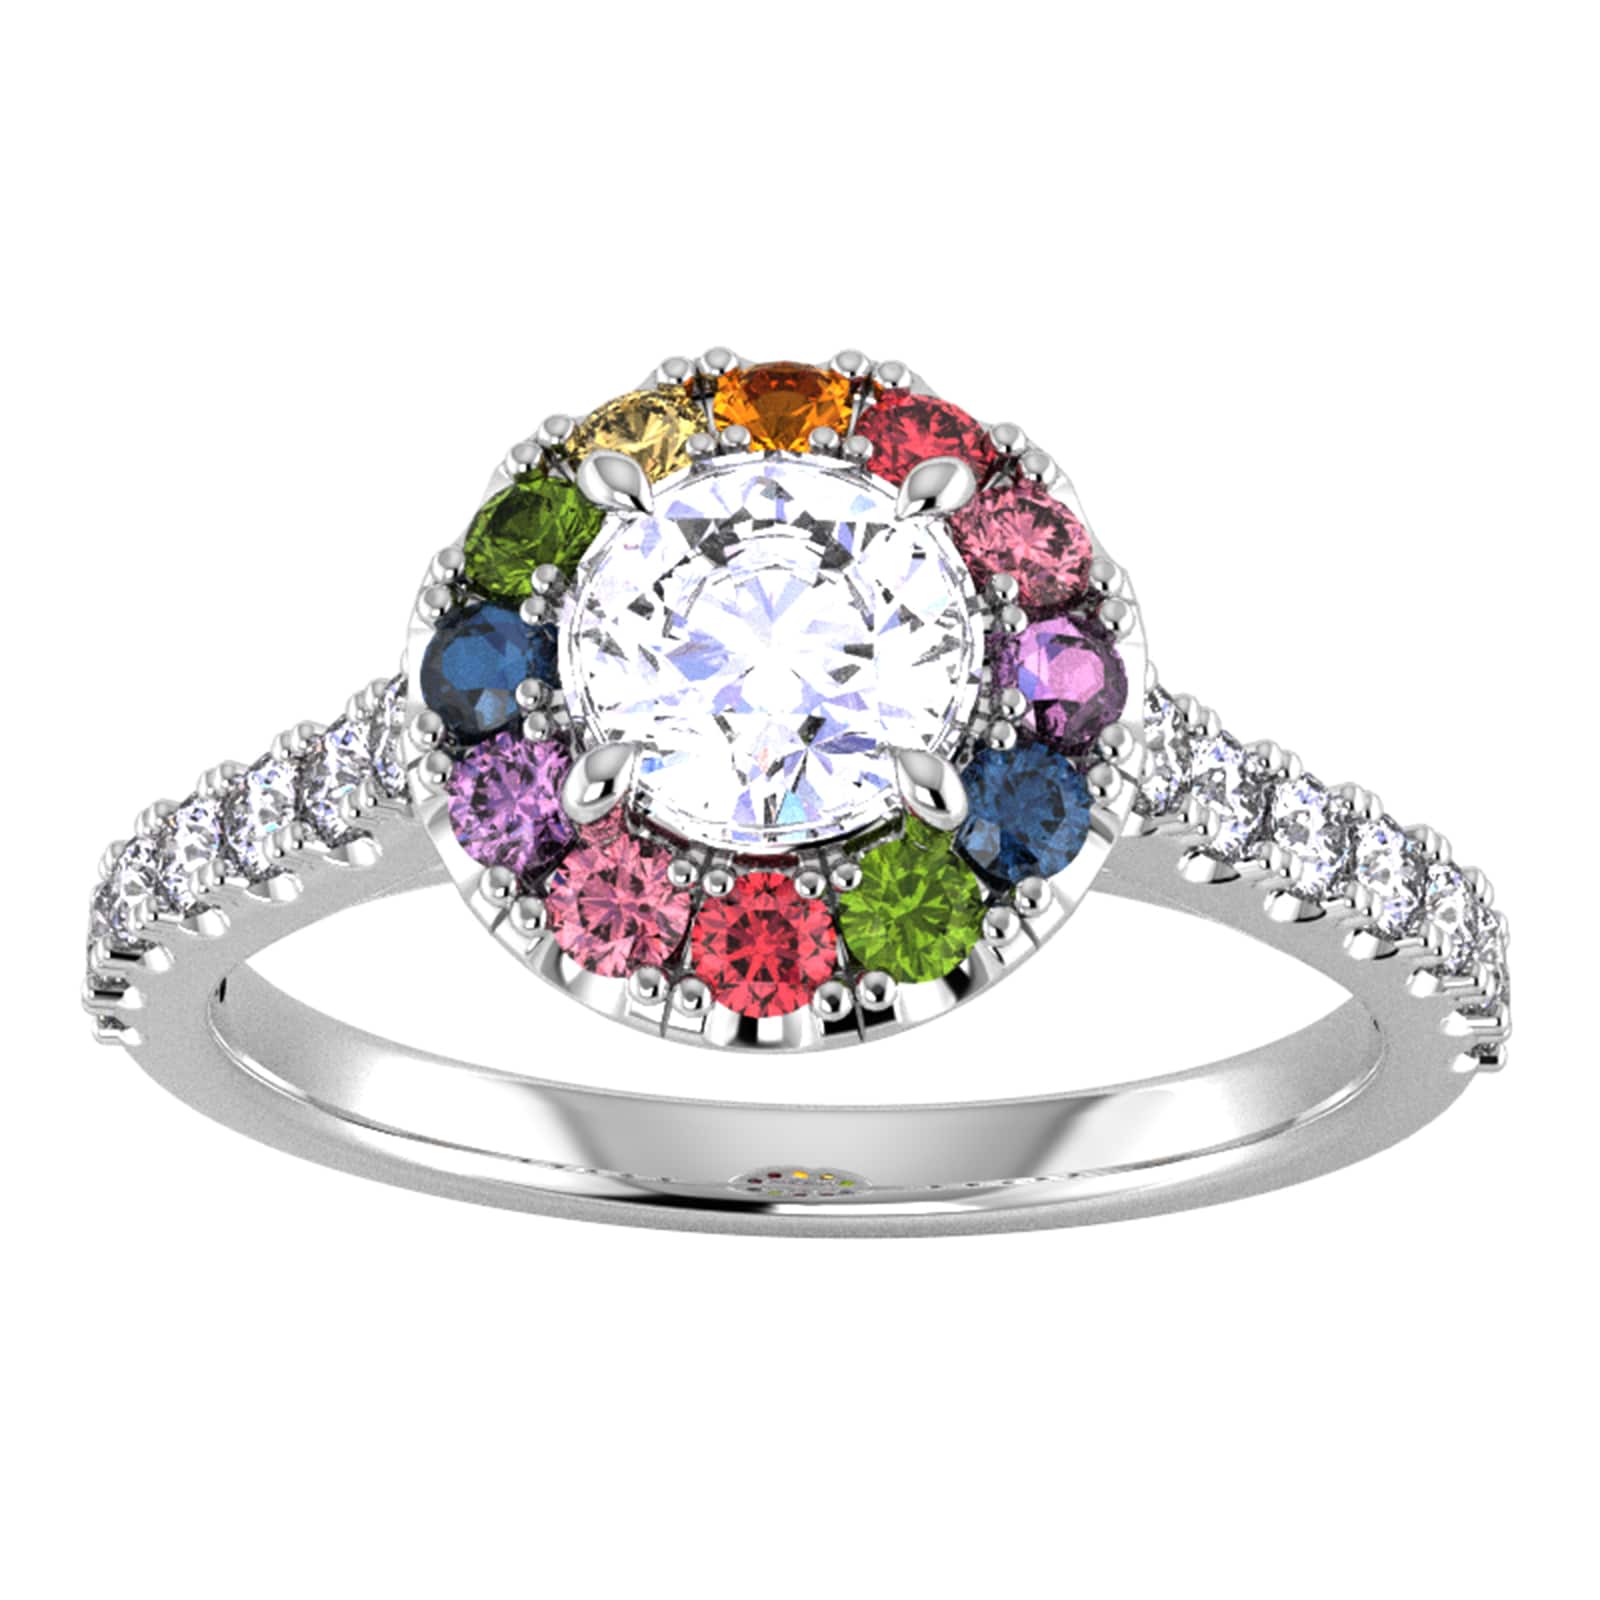 9ct White Gold Diamond & Rainbow Sapphire Halo Ring - Ring Size T.5